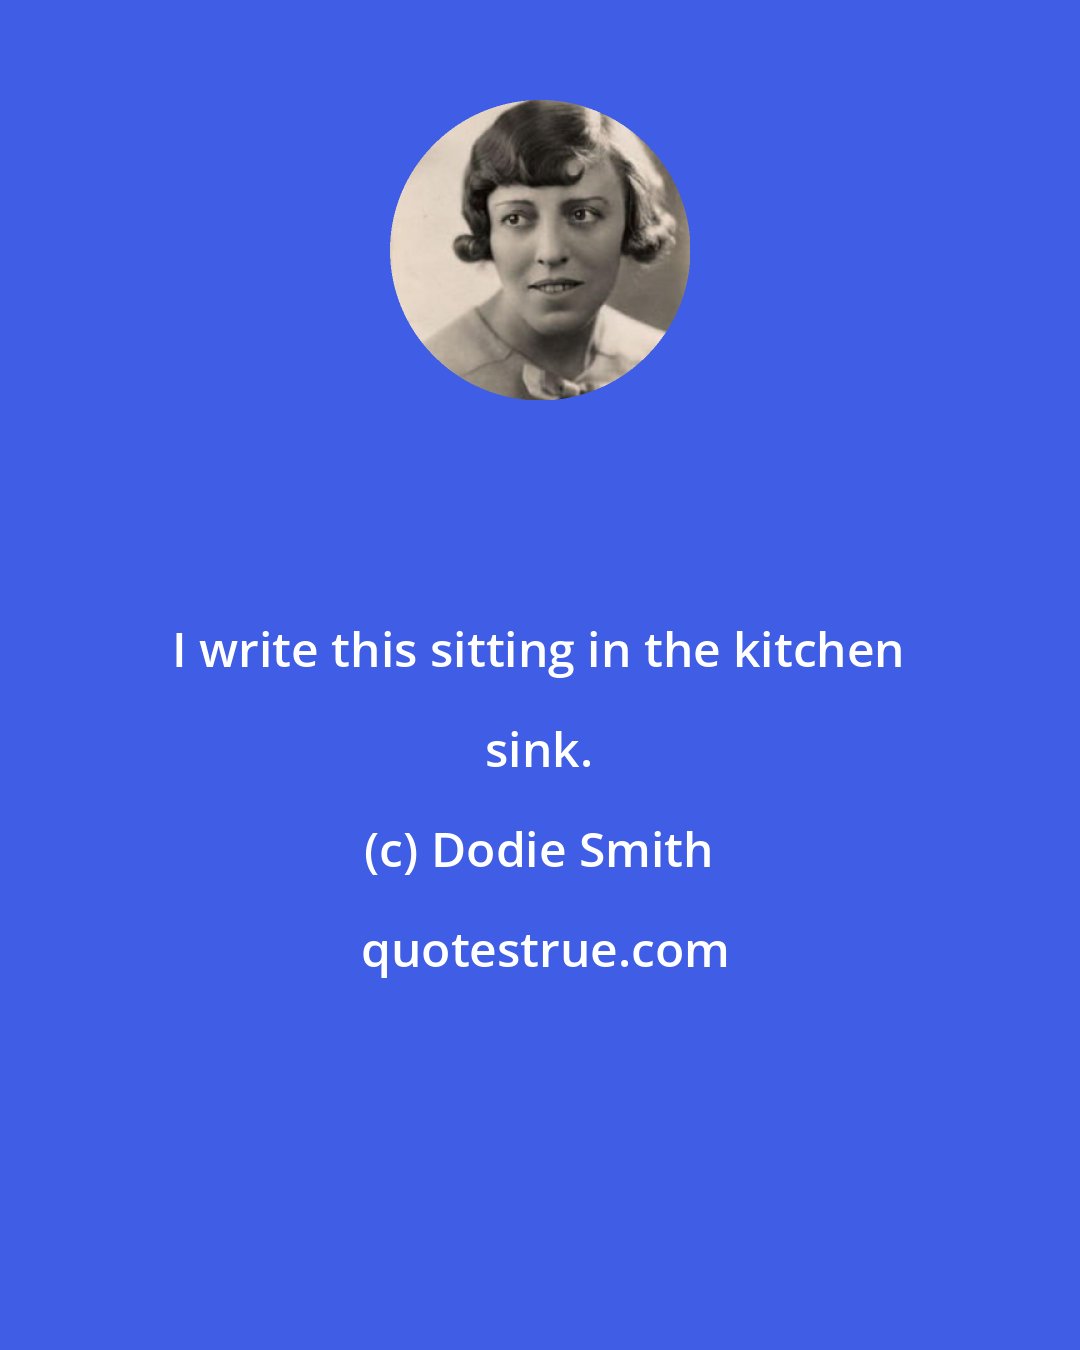 Dodie Smith: I write this sitting in the kitchen sink.